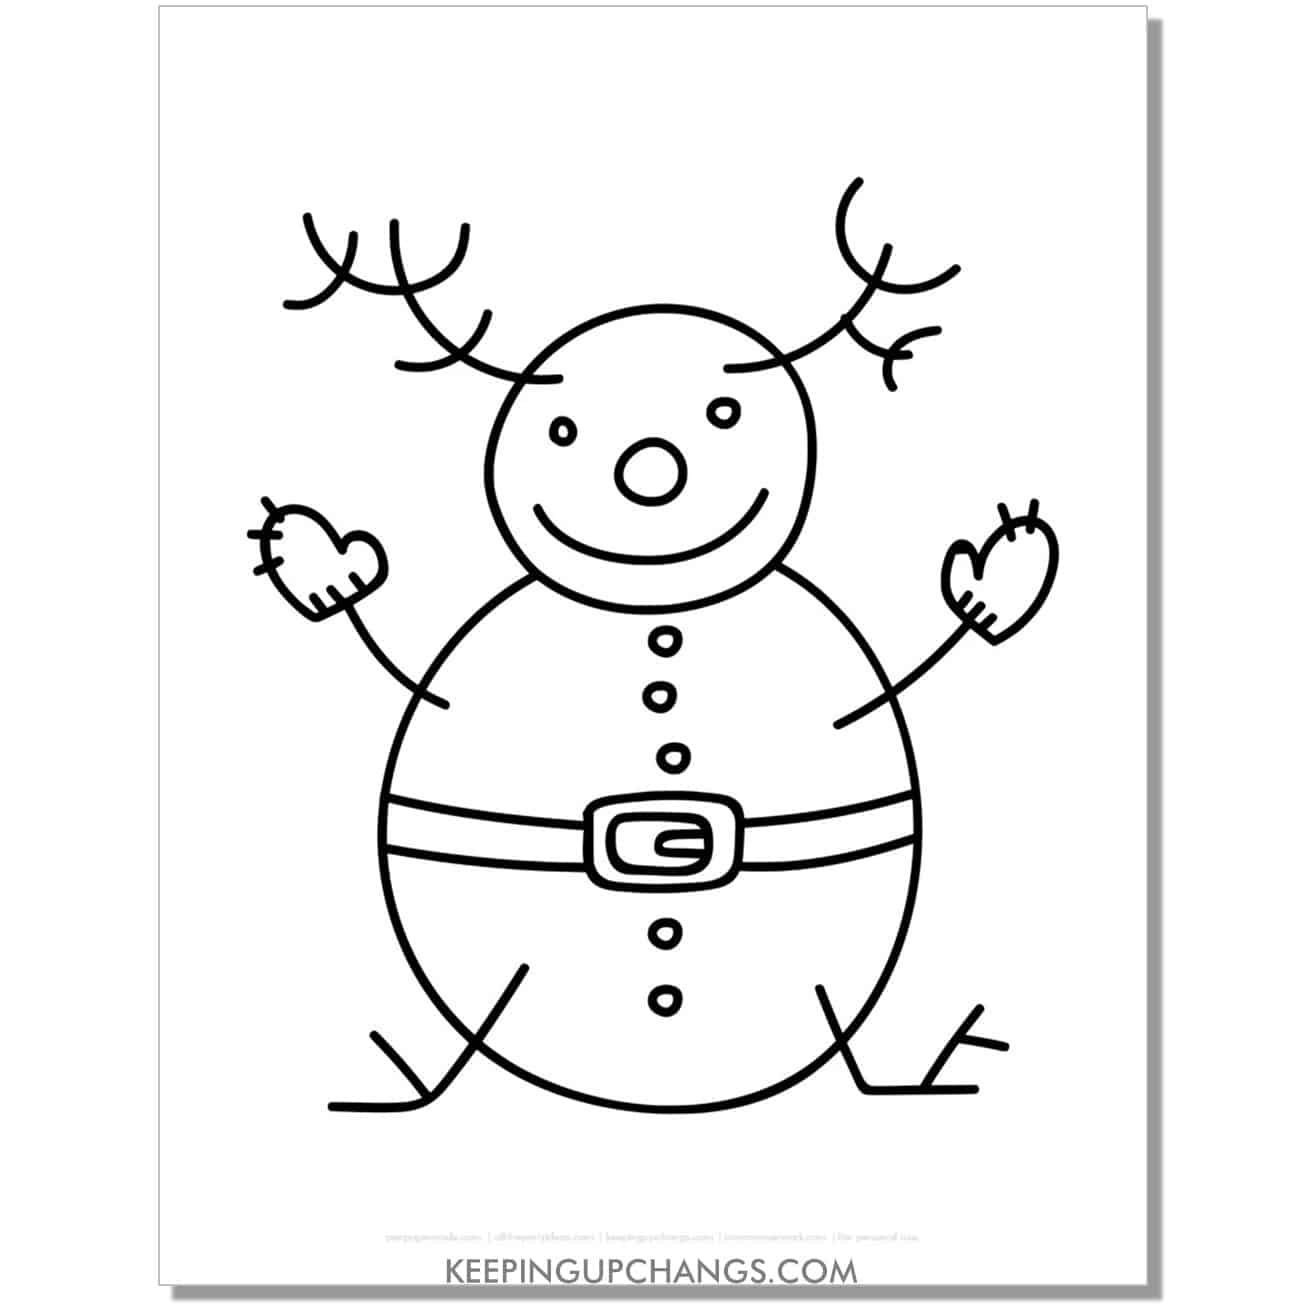 free snowman with reindeer antlers, santa belt drawing coloring page.